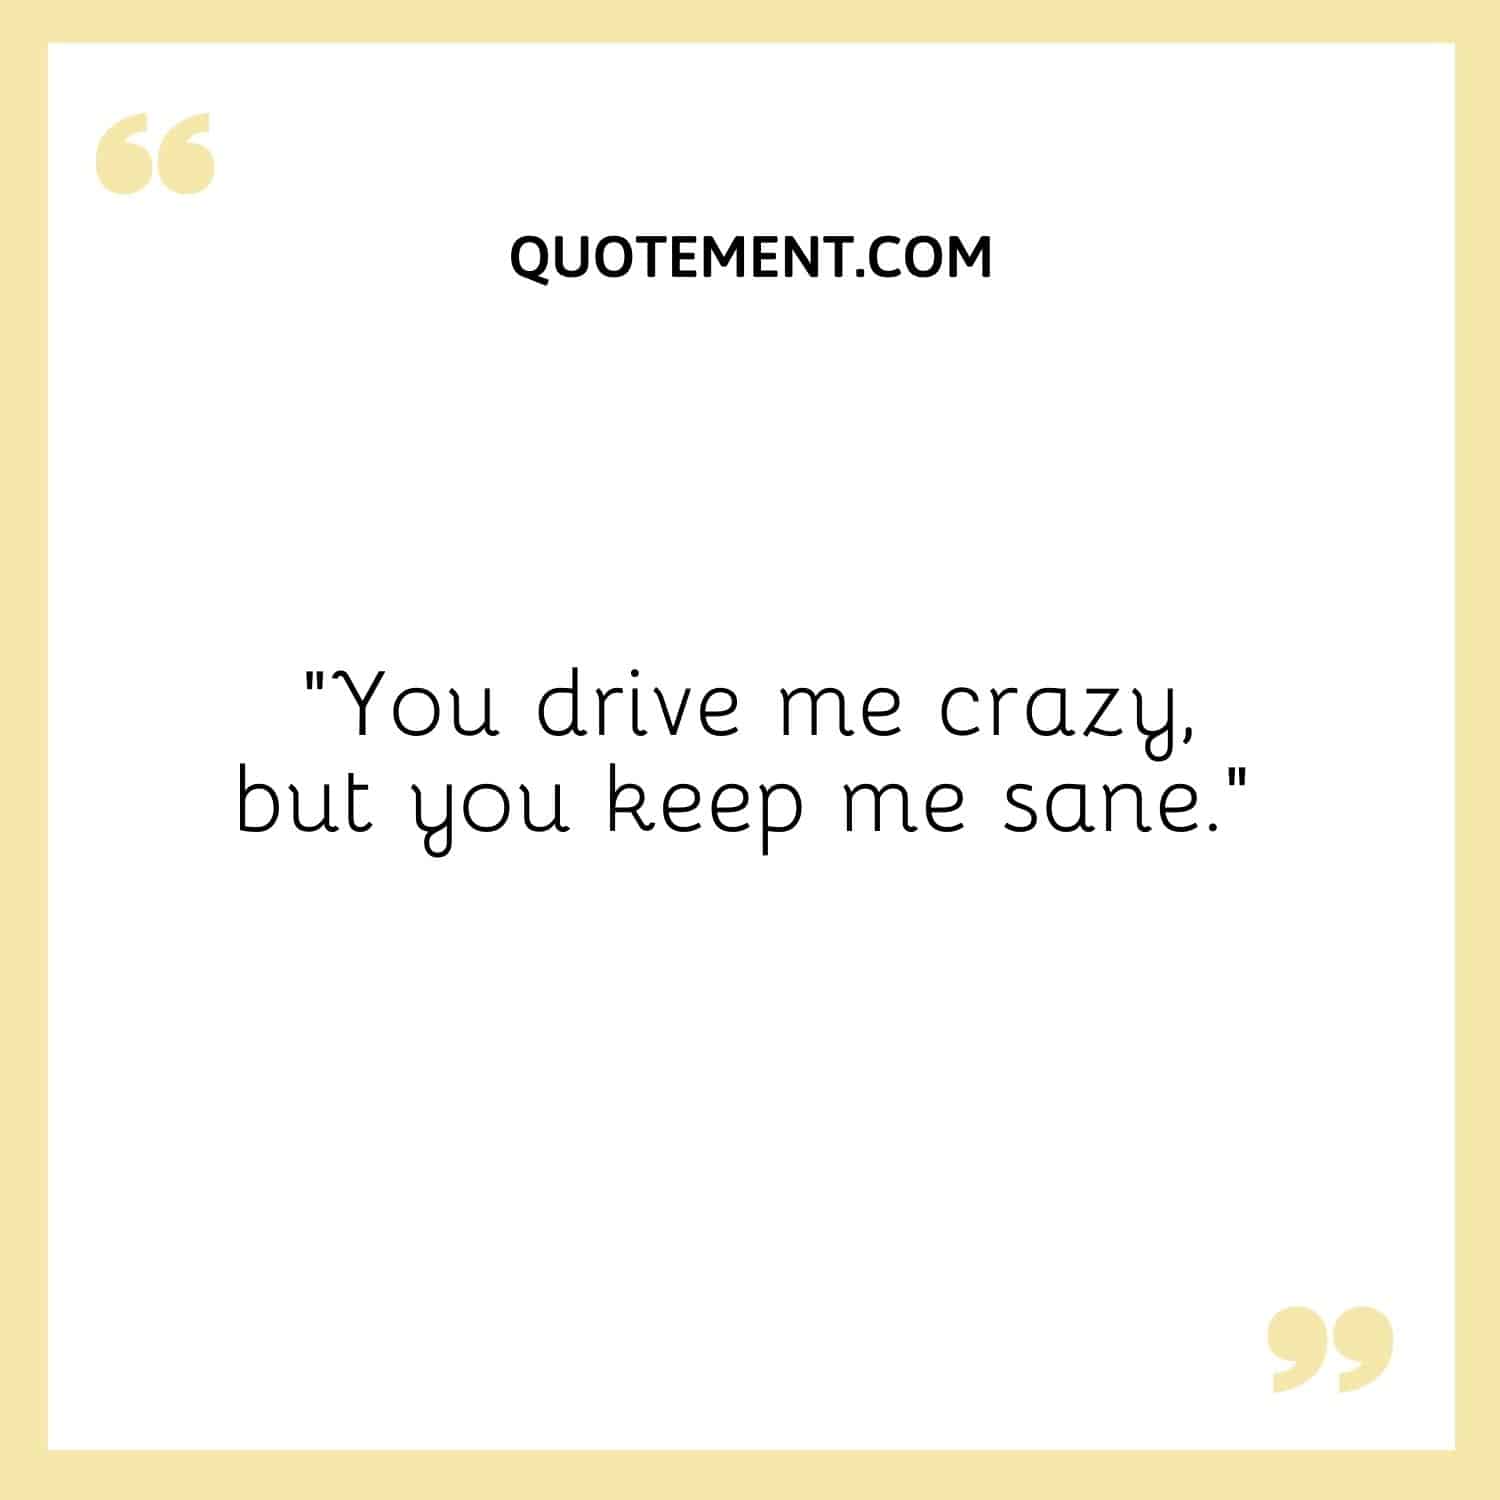 You drive me crazy, but you keep me sane